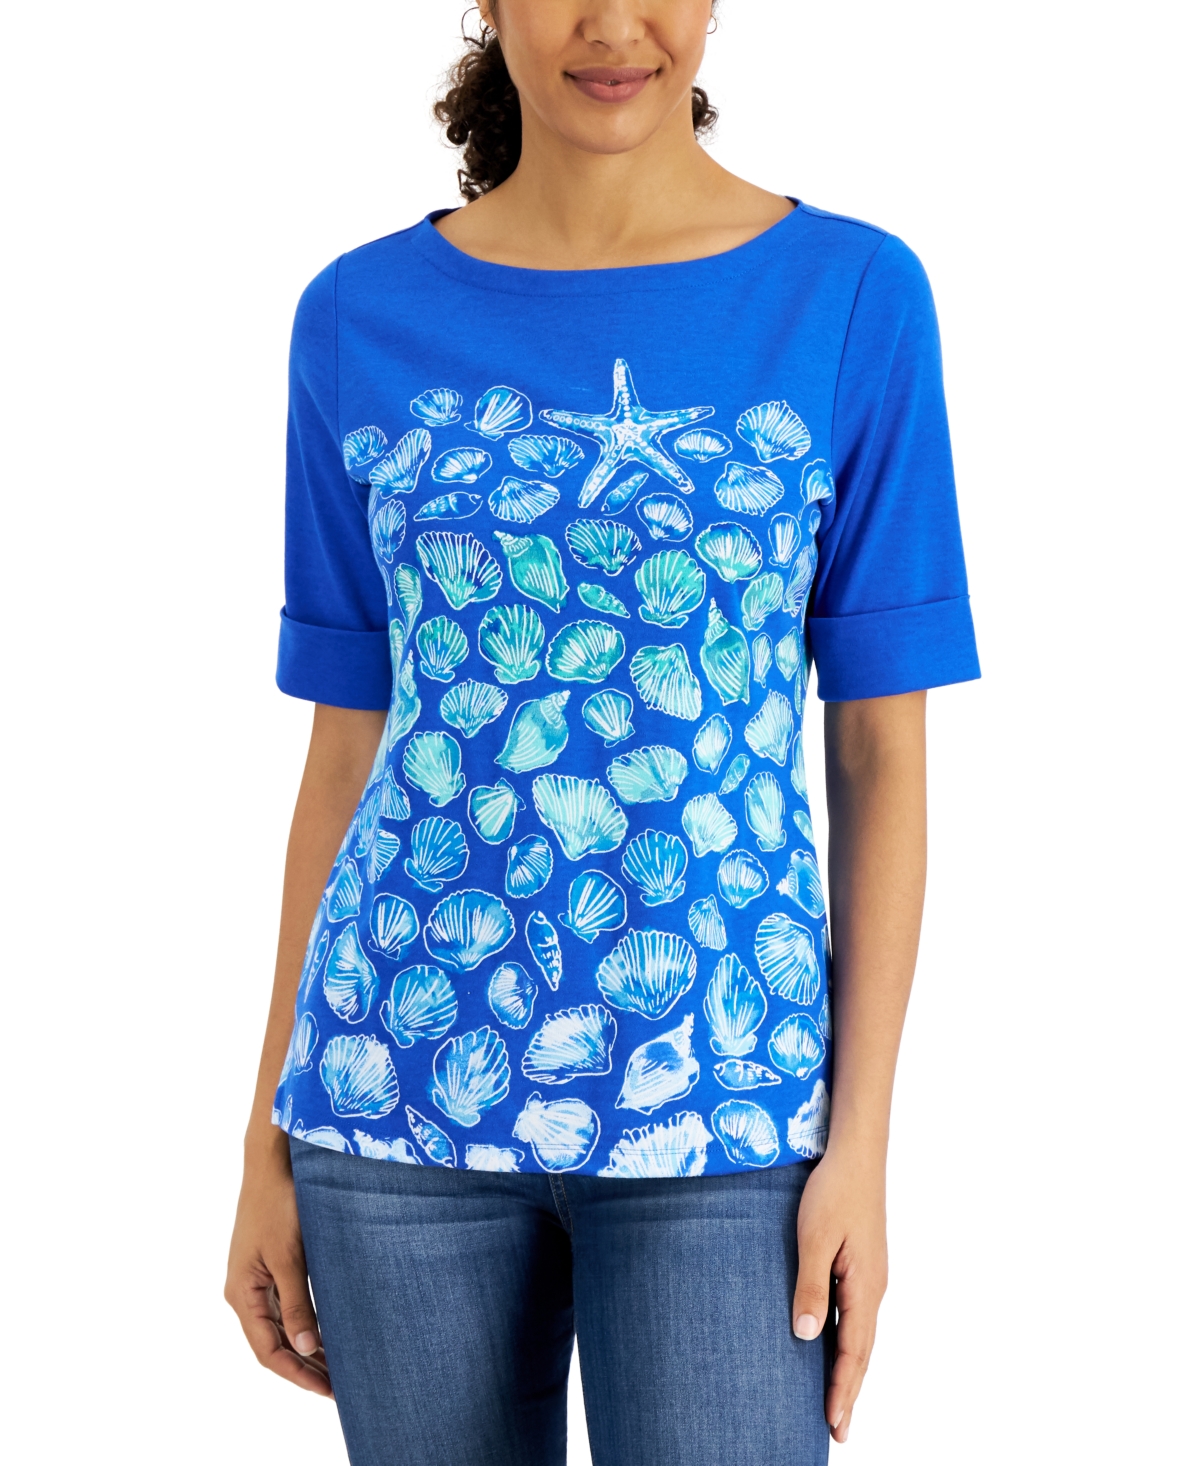 Seashell-Print Elbow-Sleeve Top, Created for Macy's - Ultra Blue